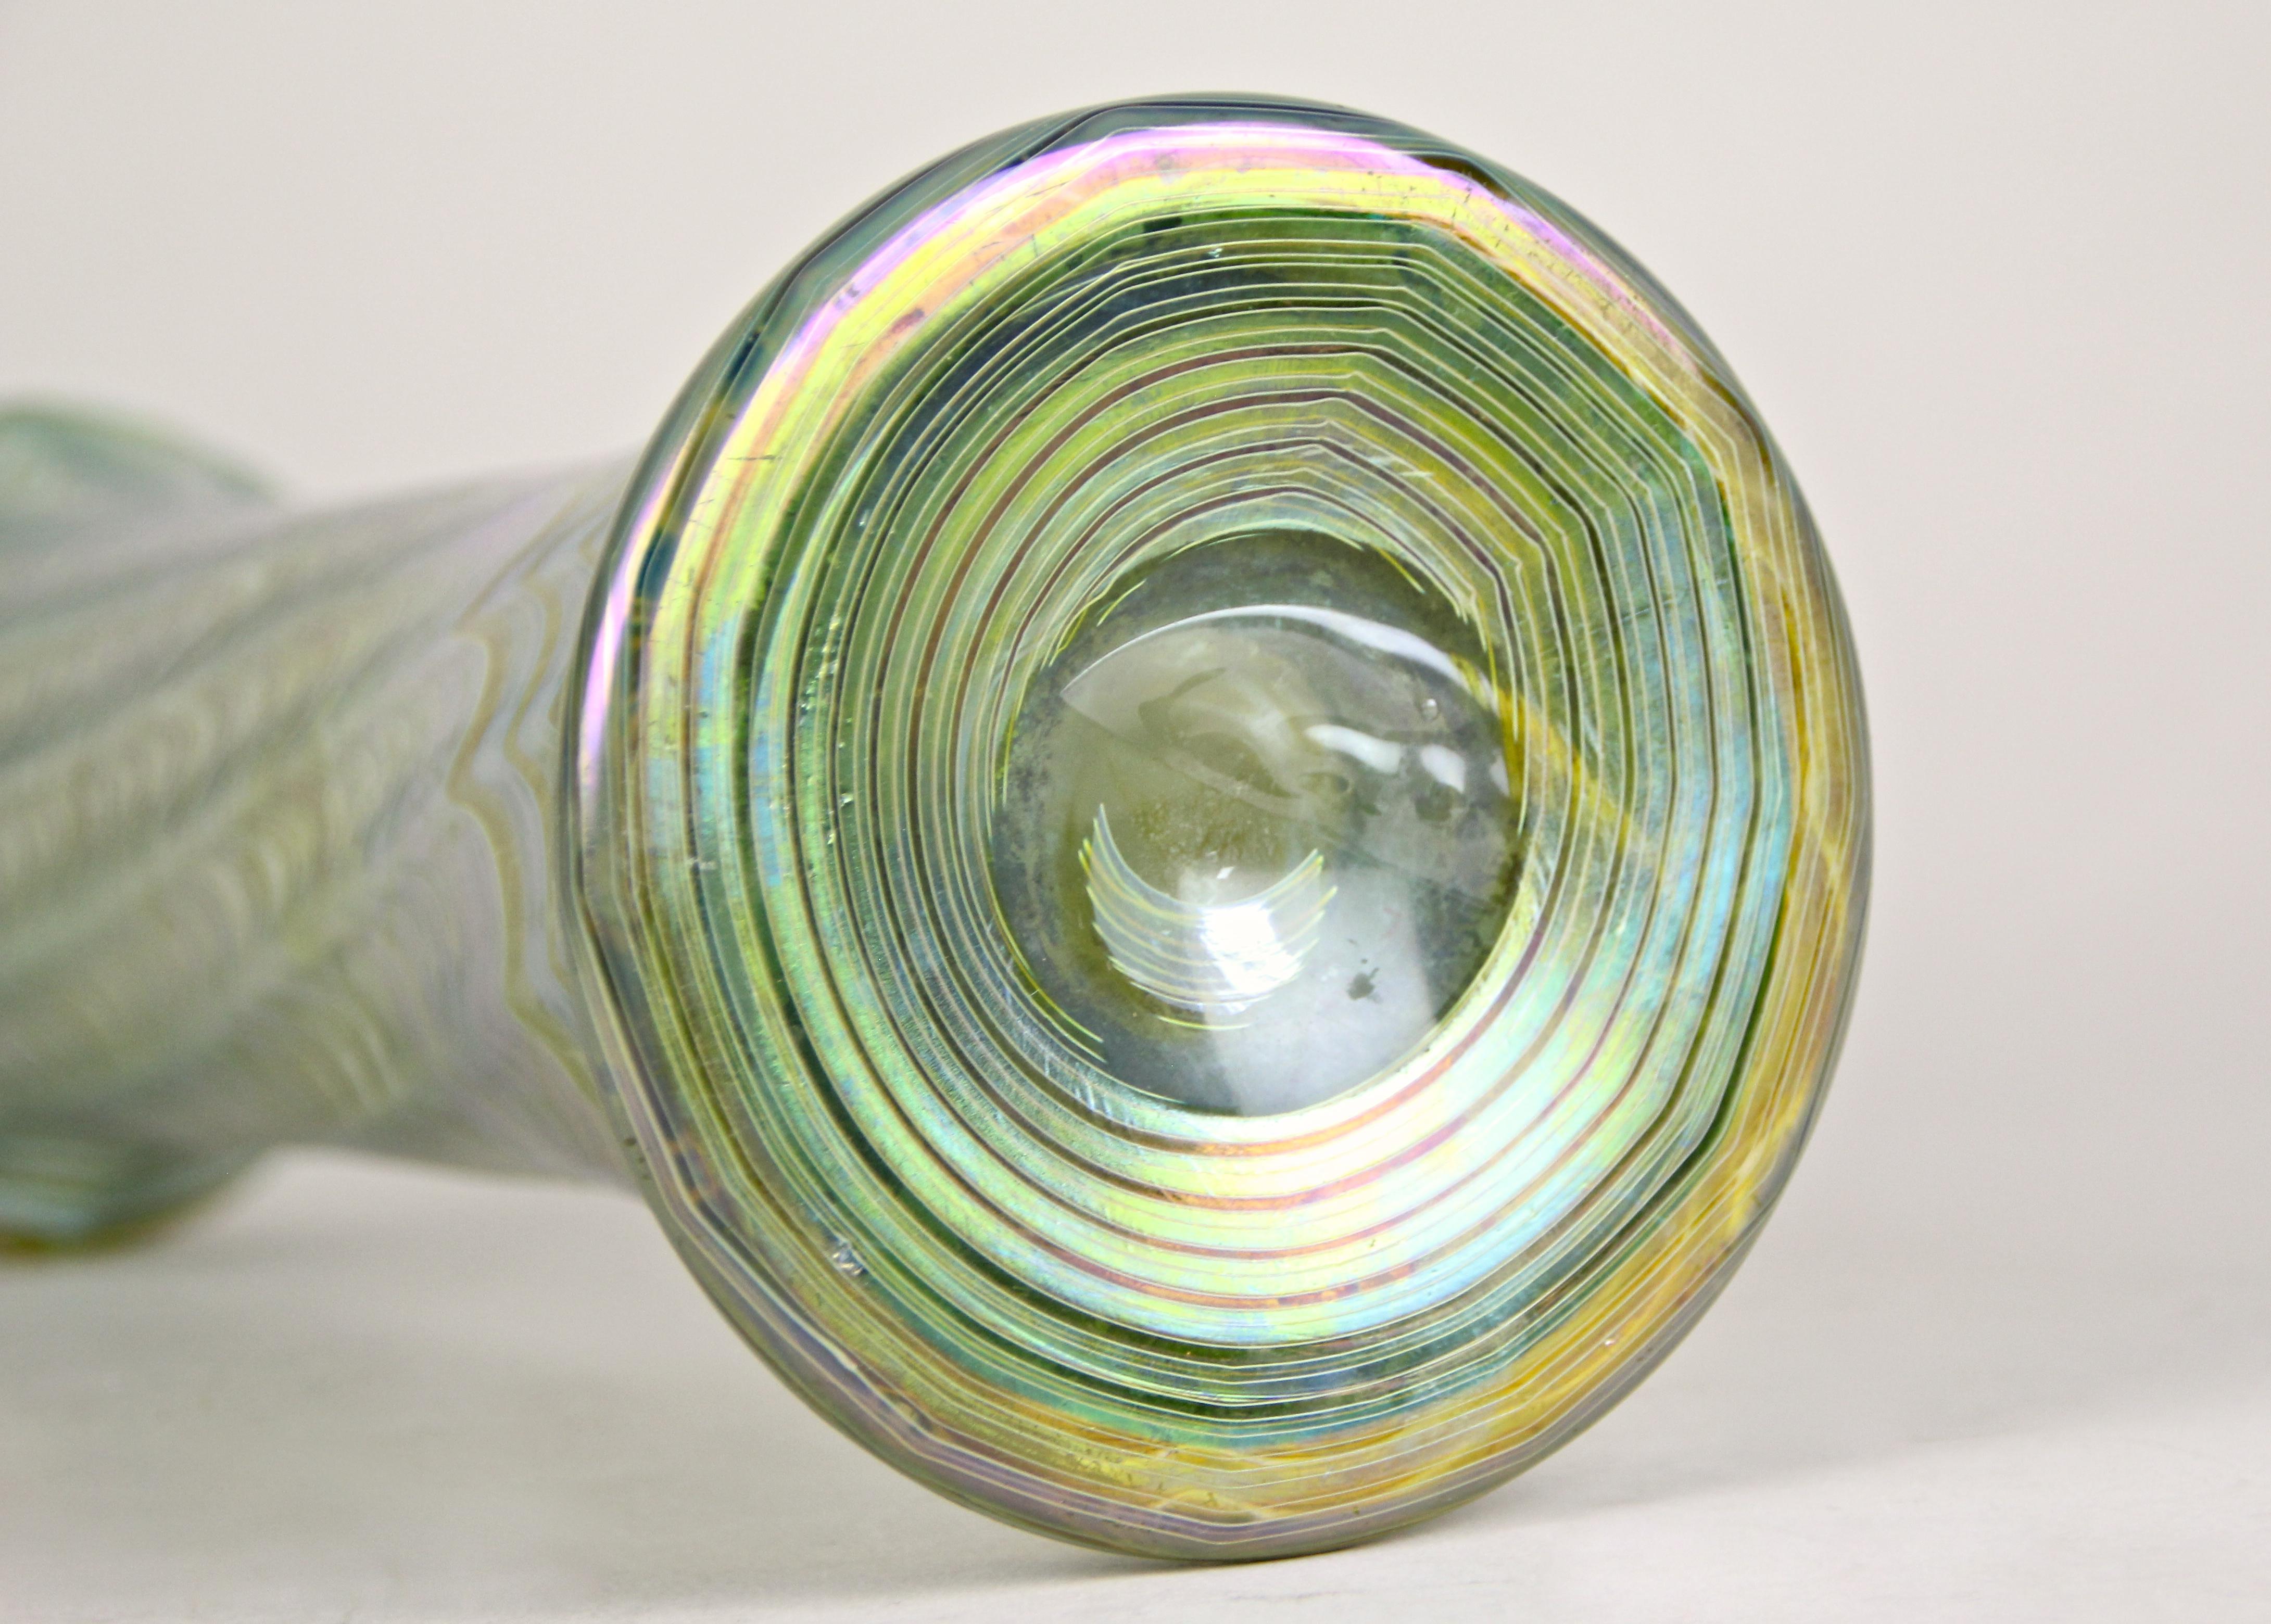 Loetz Witwe Glass Vase Phaenomen Genre 6893 Green, Bohemia, circa 1899 For Sale 1